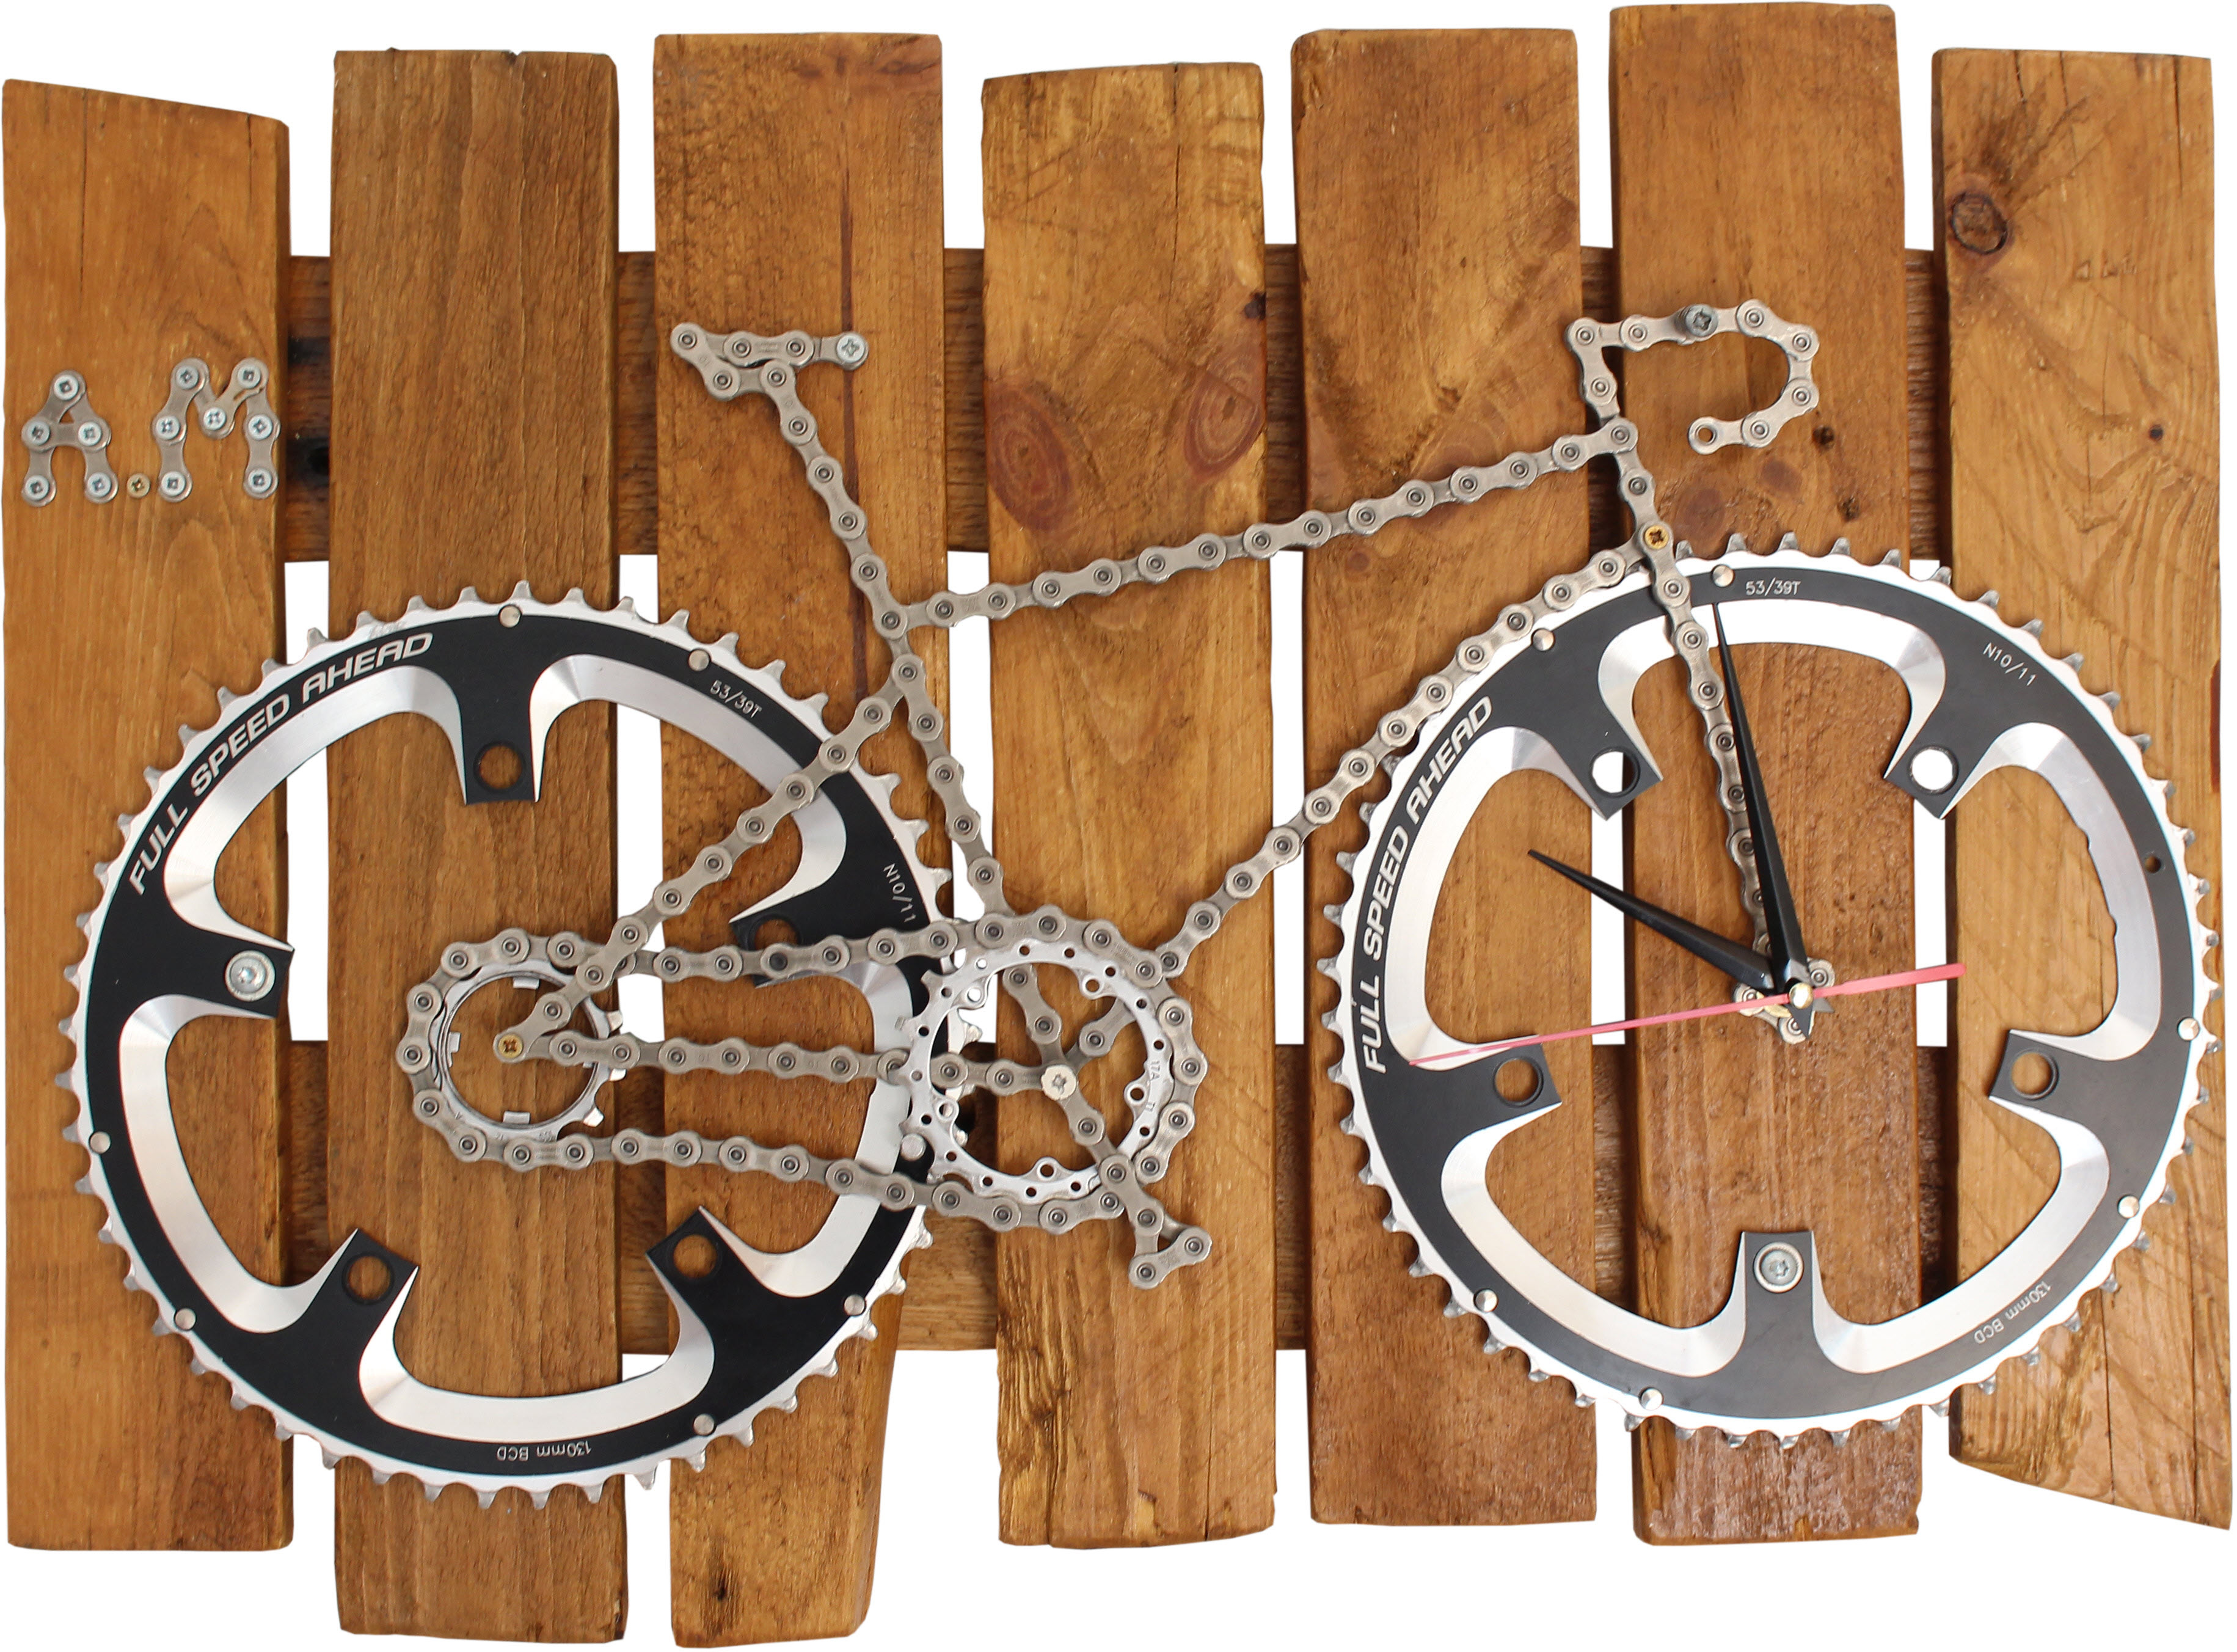 velo tableau horloge, velo panneau horloge, velo design, cyclisme, velo cadeau, eco-cadeau, eco-horloge, bike gift, bike clock, cycling, ecofriendly gift, recycled bicycle gear desk clock, upcycled clock, bicycle clock, cycling gift, tableau horloge decorative, bike clock,